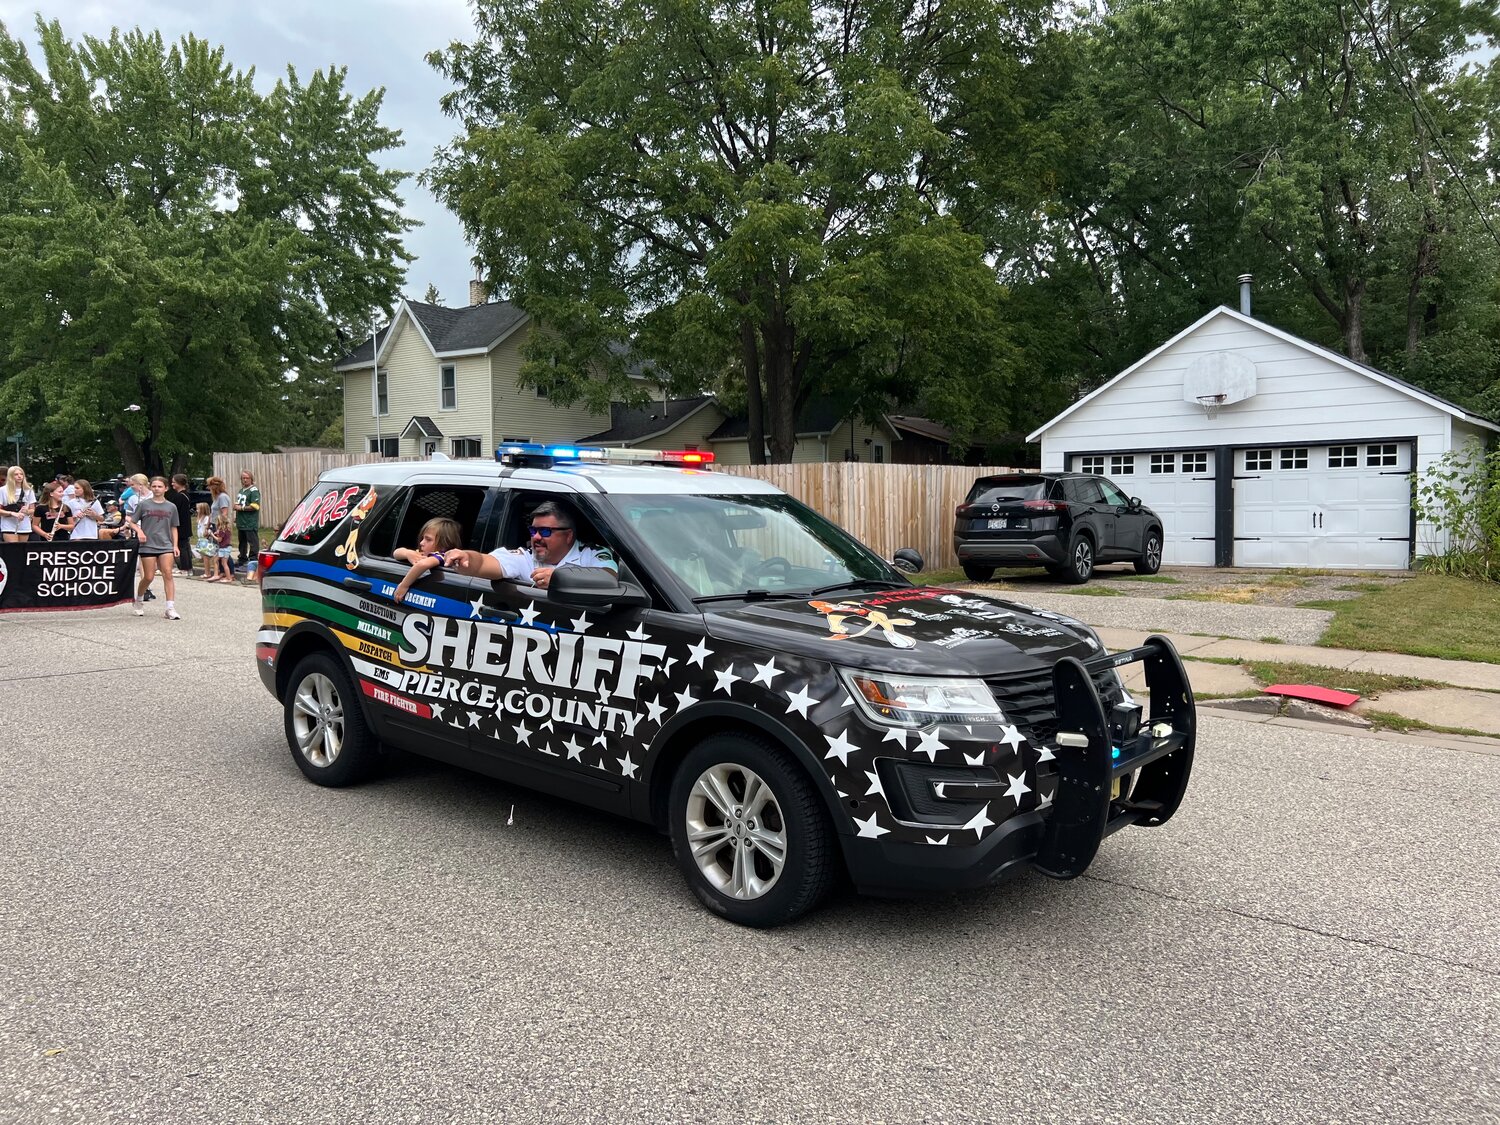 Pierce County Sheriff Chad Koranda took aim with lollipops for kids lining the Prescott Daze Parade route on Sunday.